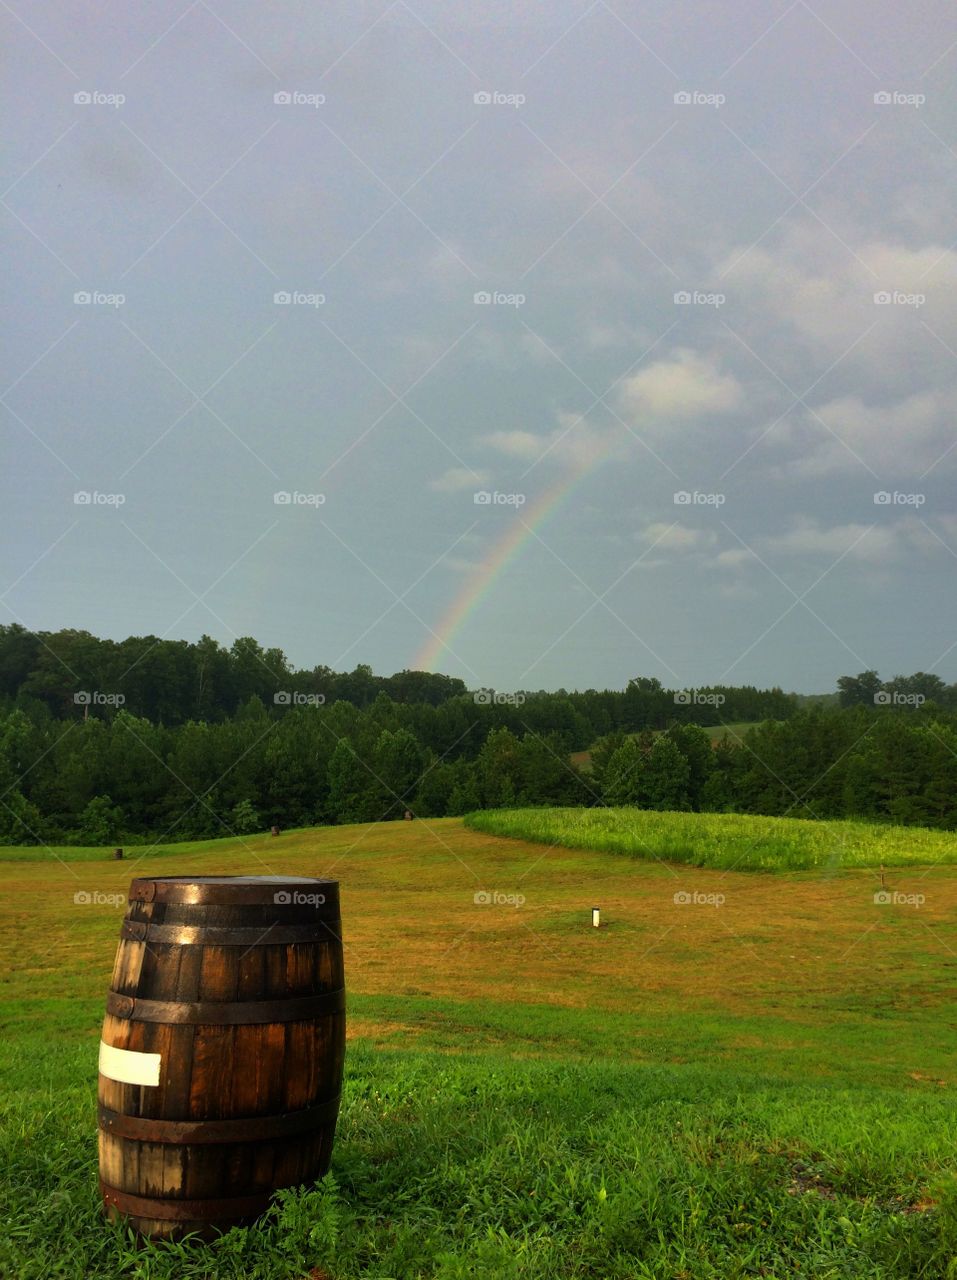 Single barrel rainbow 